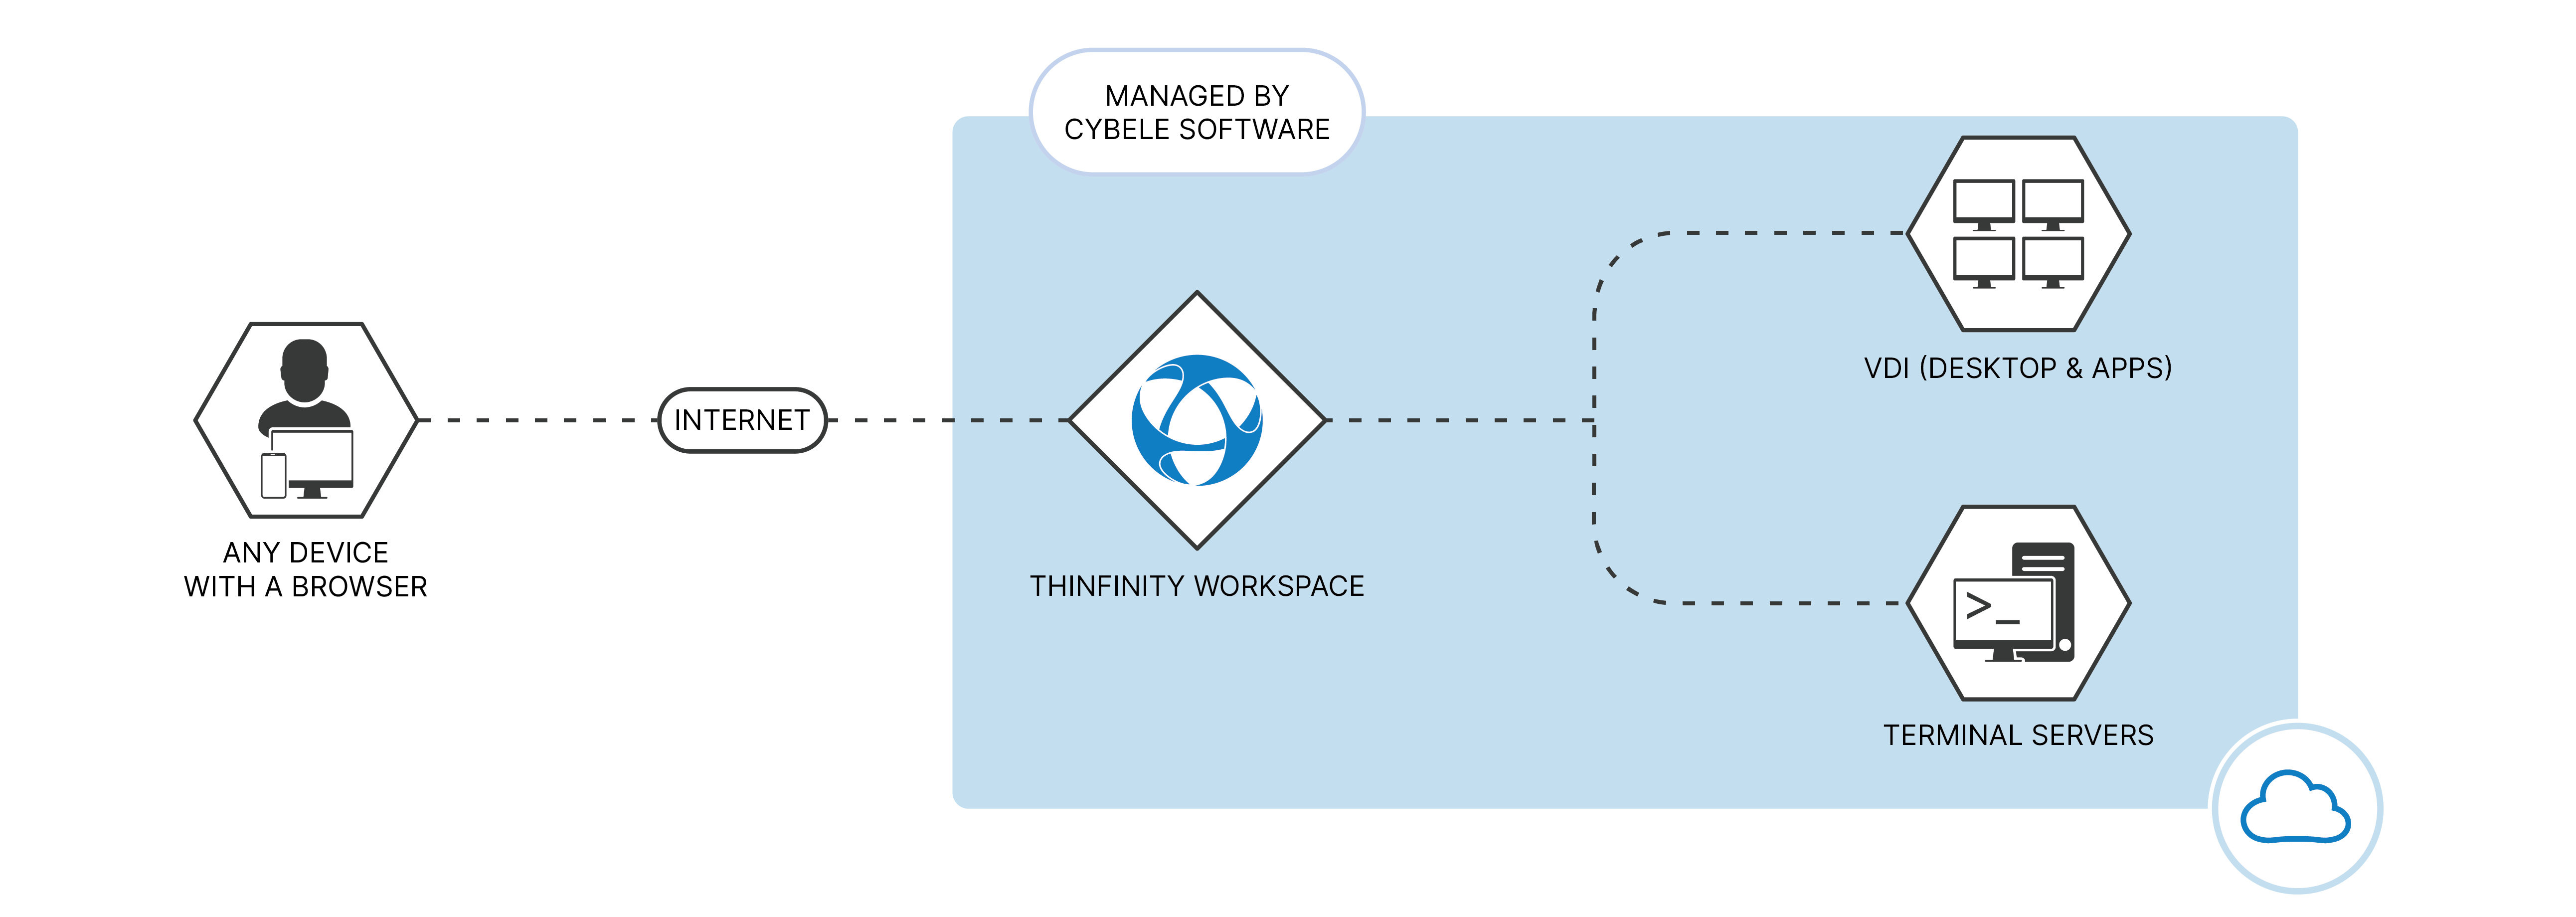 thinfinity-workspace-totalmente hospedado